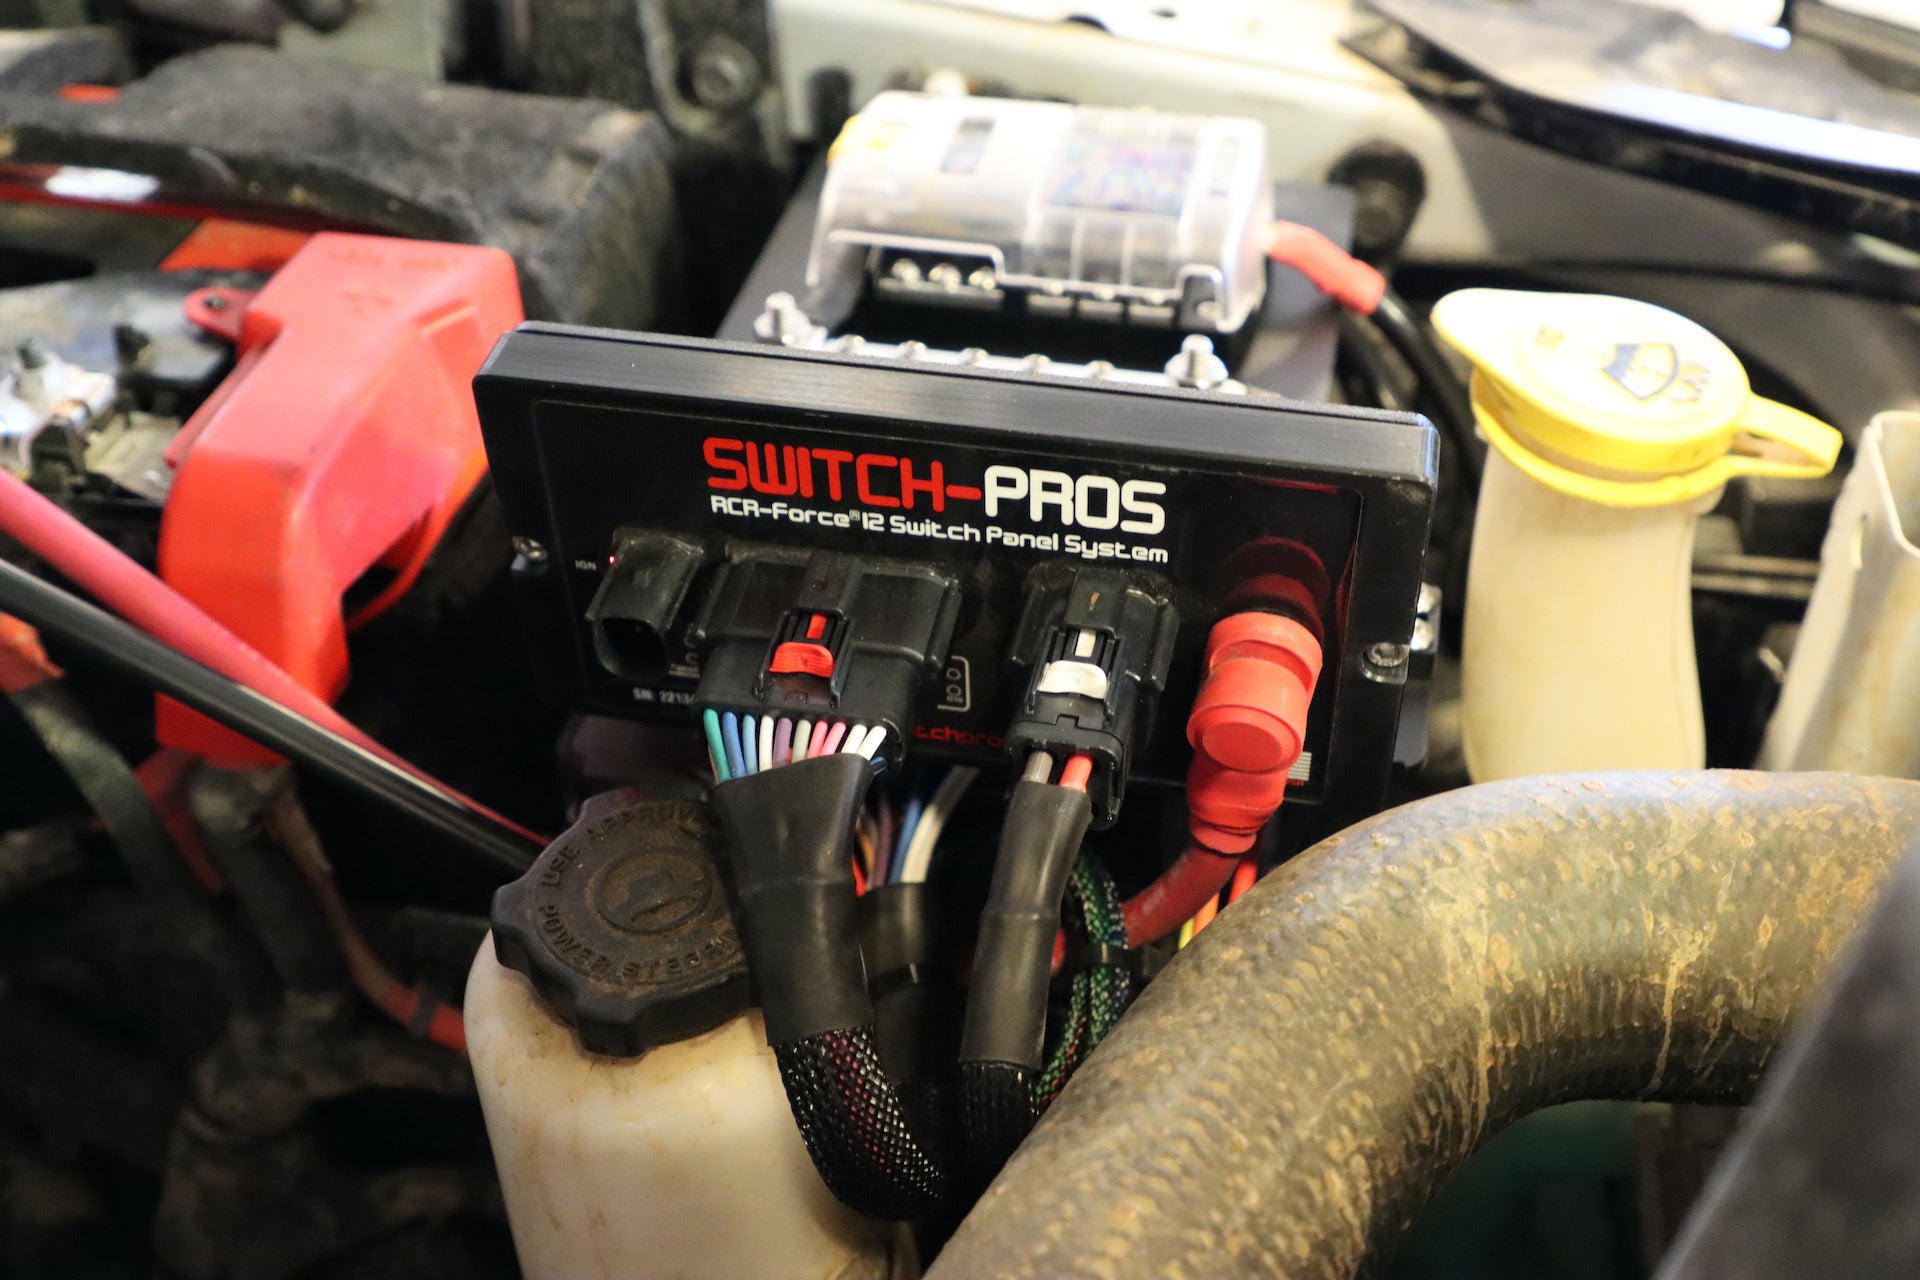 Switch Pros RCR-Force 12 mounting bracket for RAM 2500/3500 - GODZ MFG